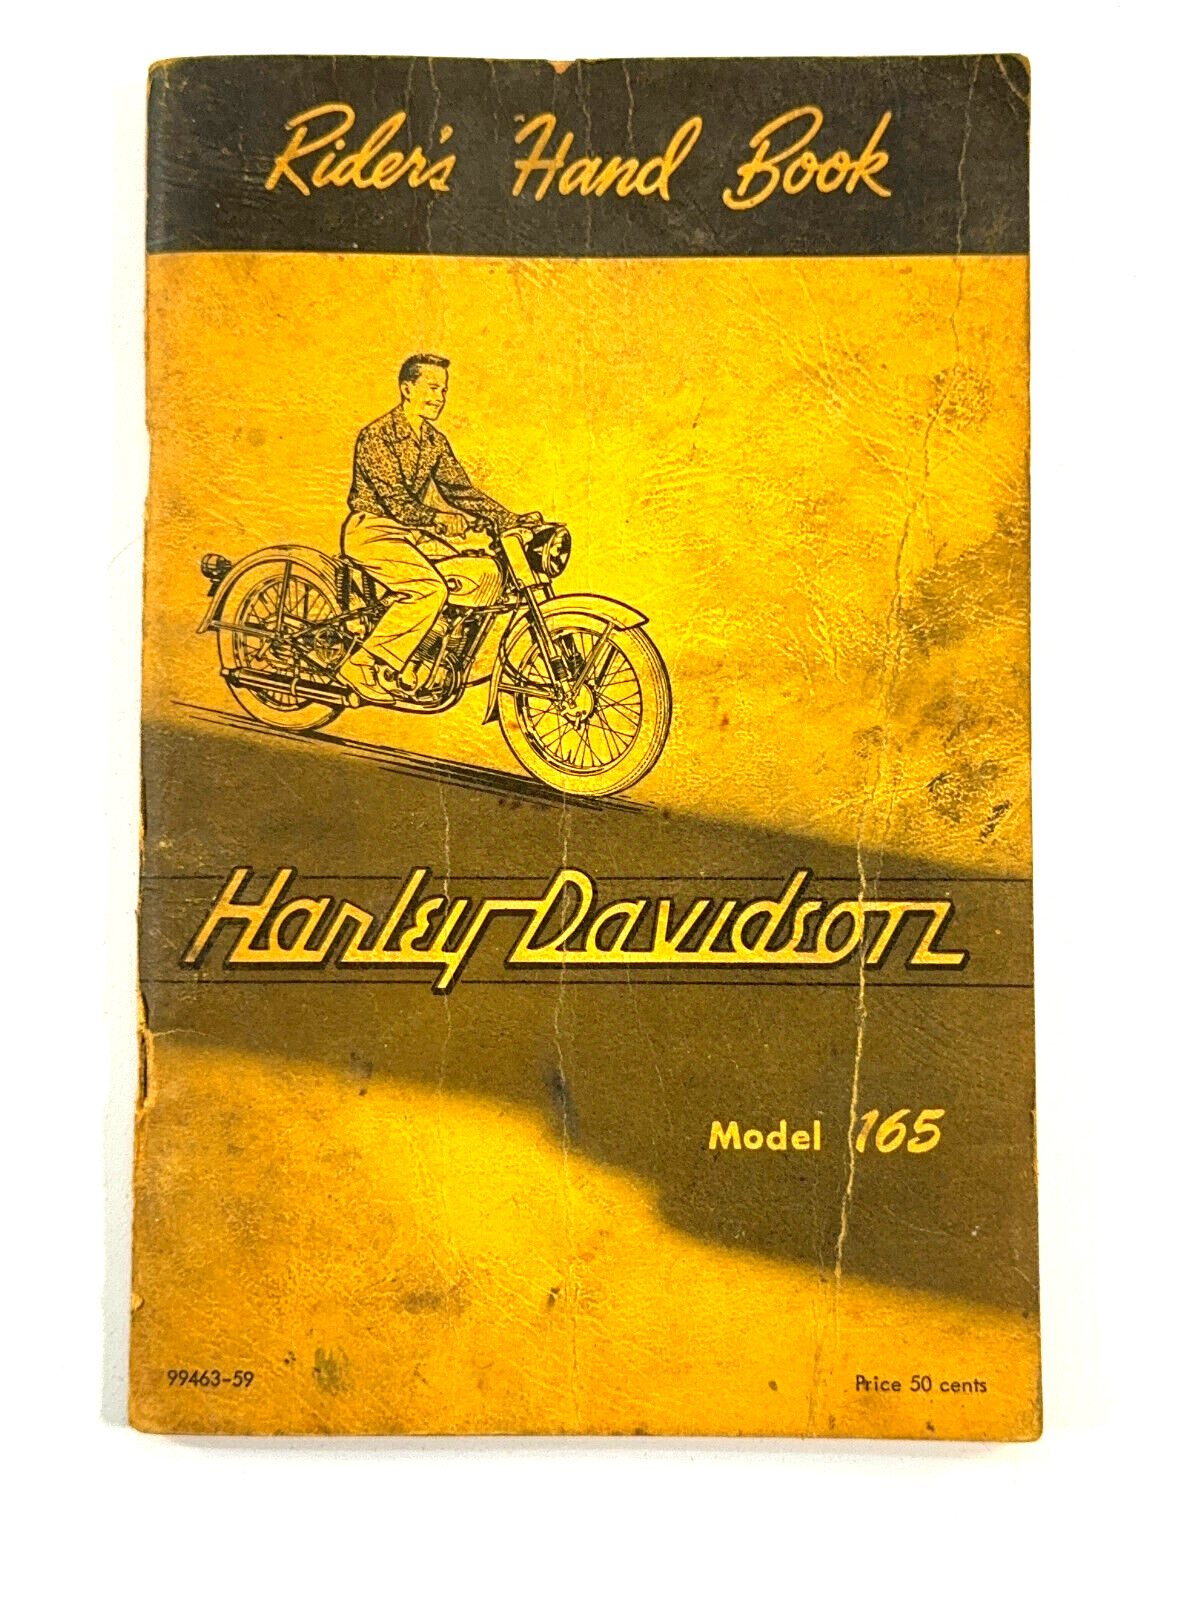 vtg 1958 Harley Davidson Rider\'s Handbook Model 165 motorcycle 